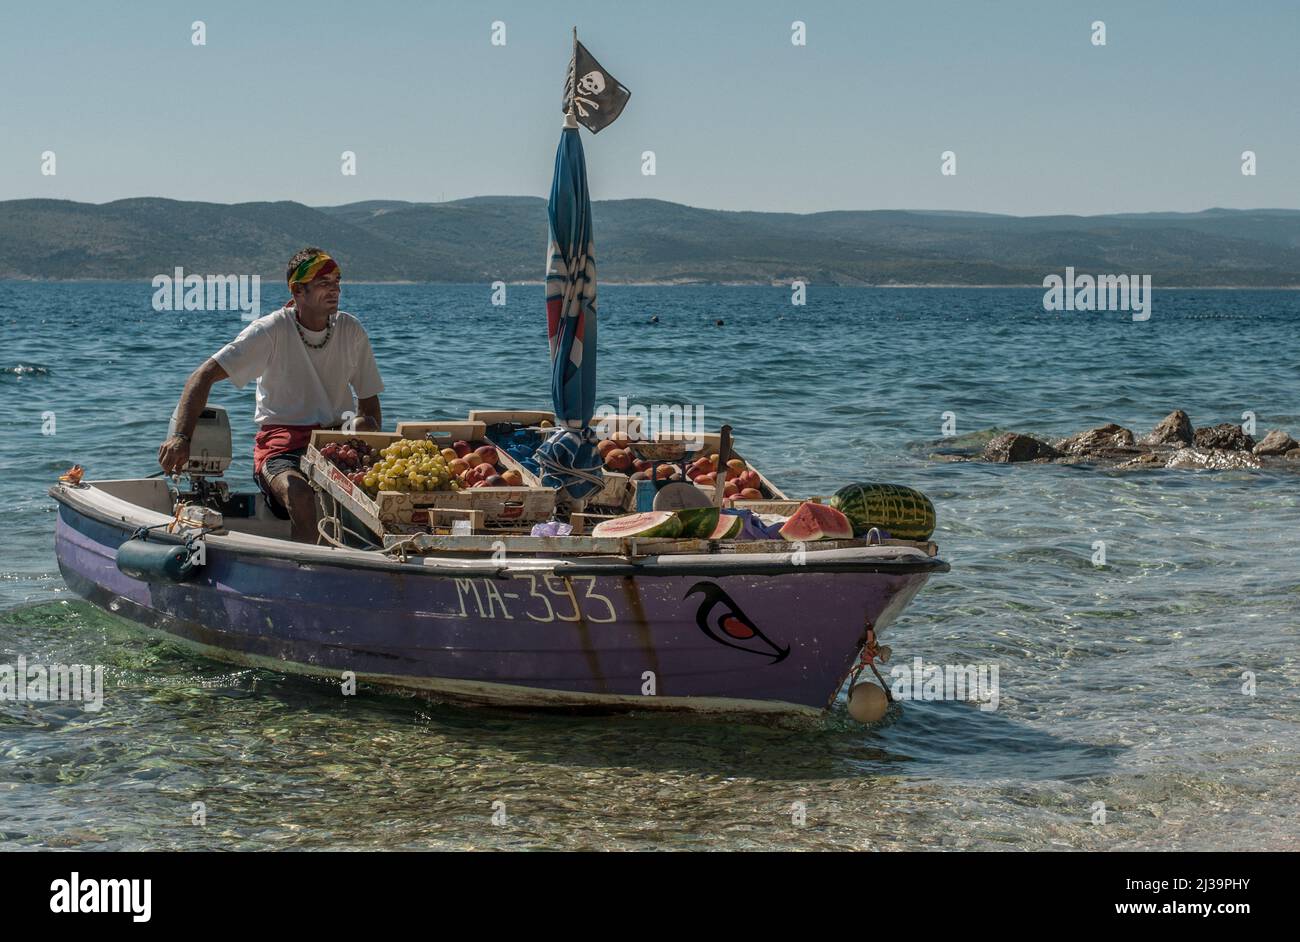 Fruit seller on the Adriatic coast. Stock Photo